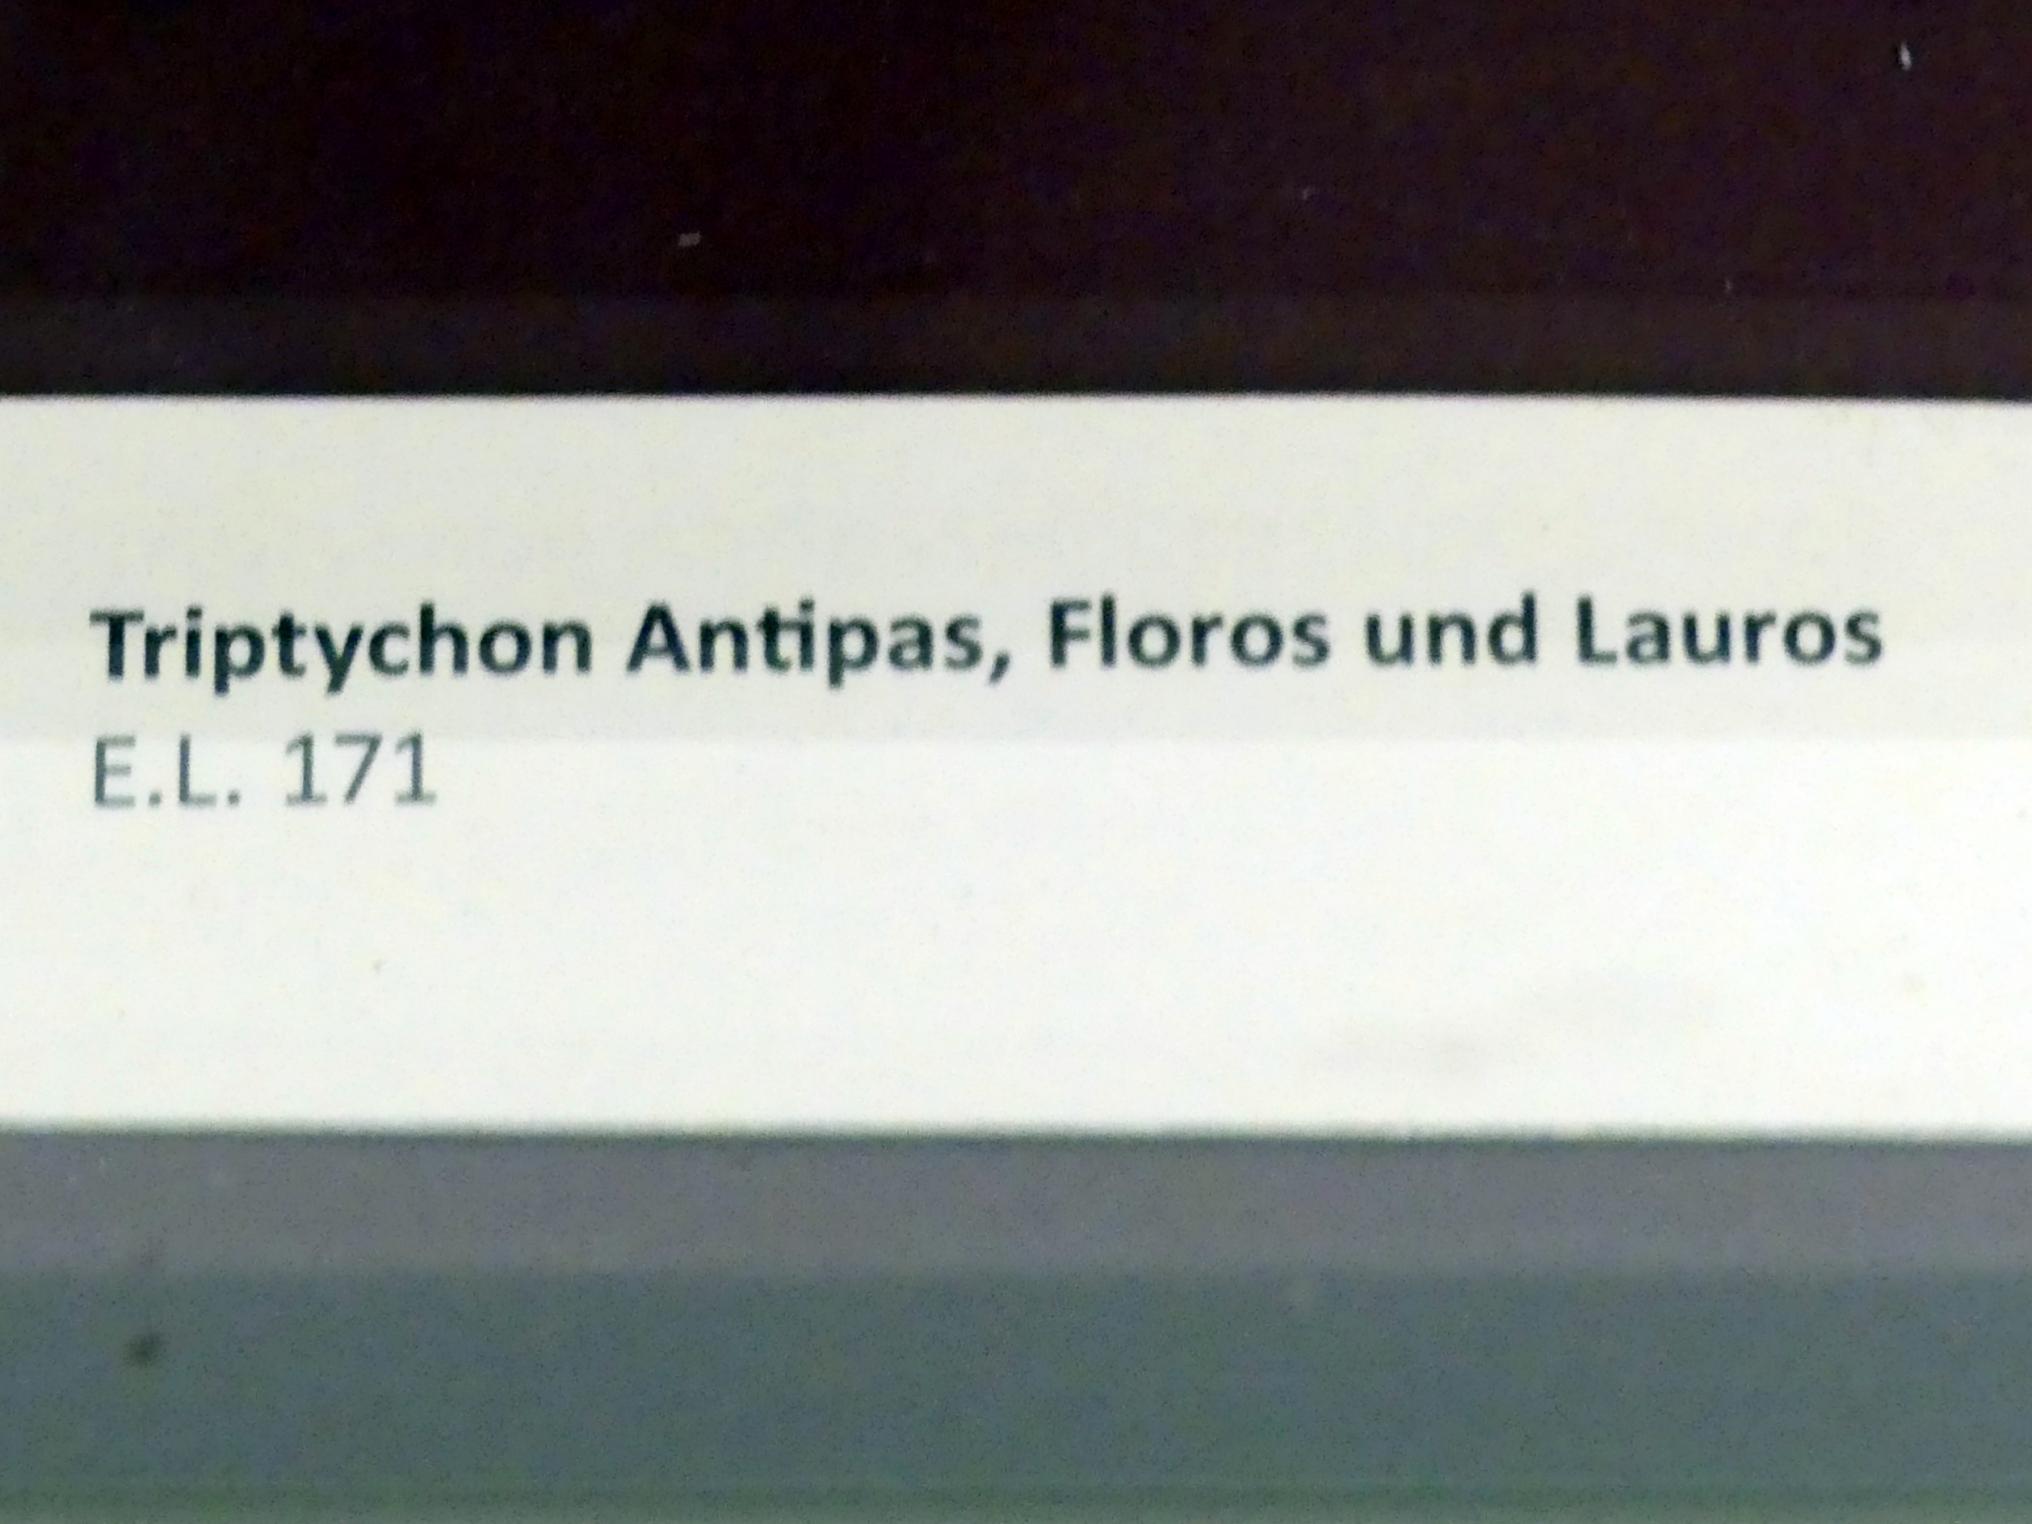 Triptichon Antipas, Floros und Lauros, Frankfurt am Main, Ikonen-Museum, Obergeschoss, Undatiert, Bild 2/2